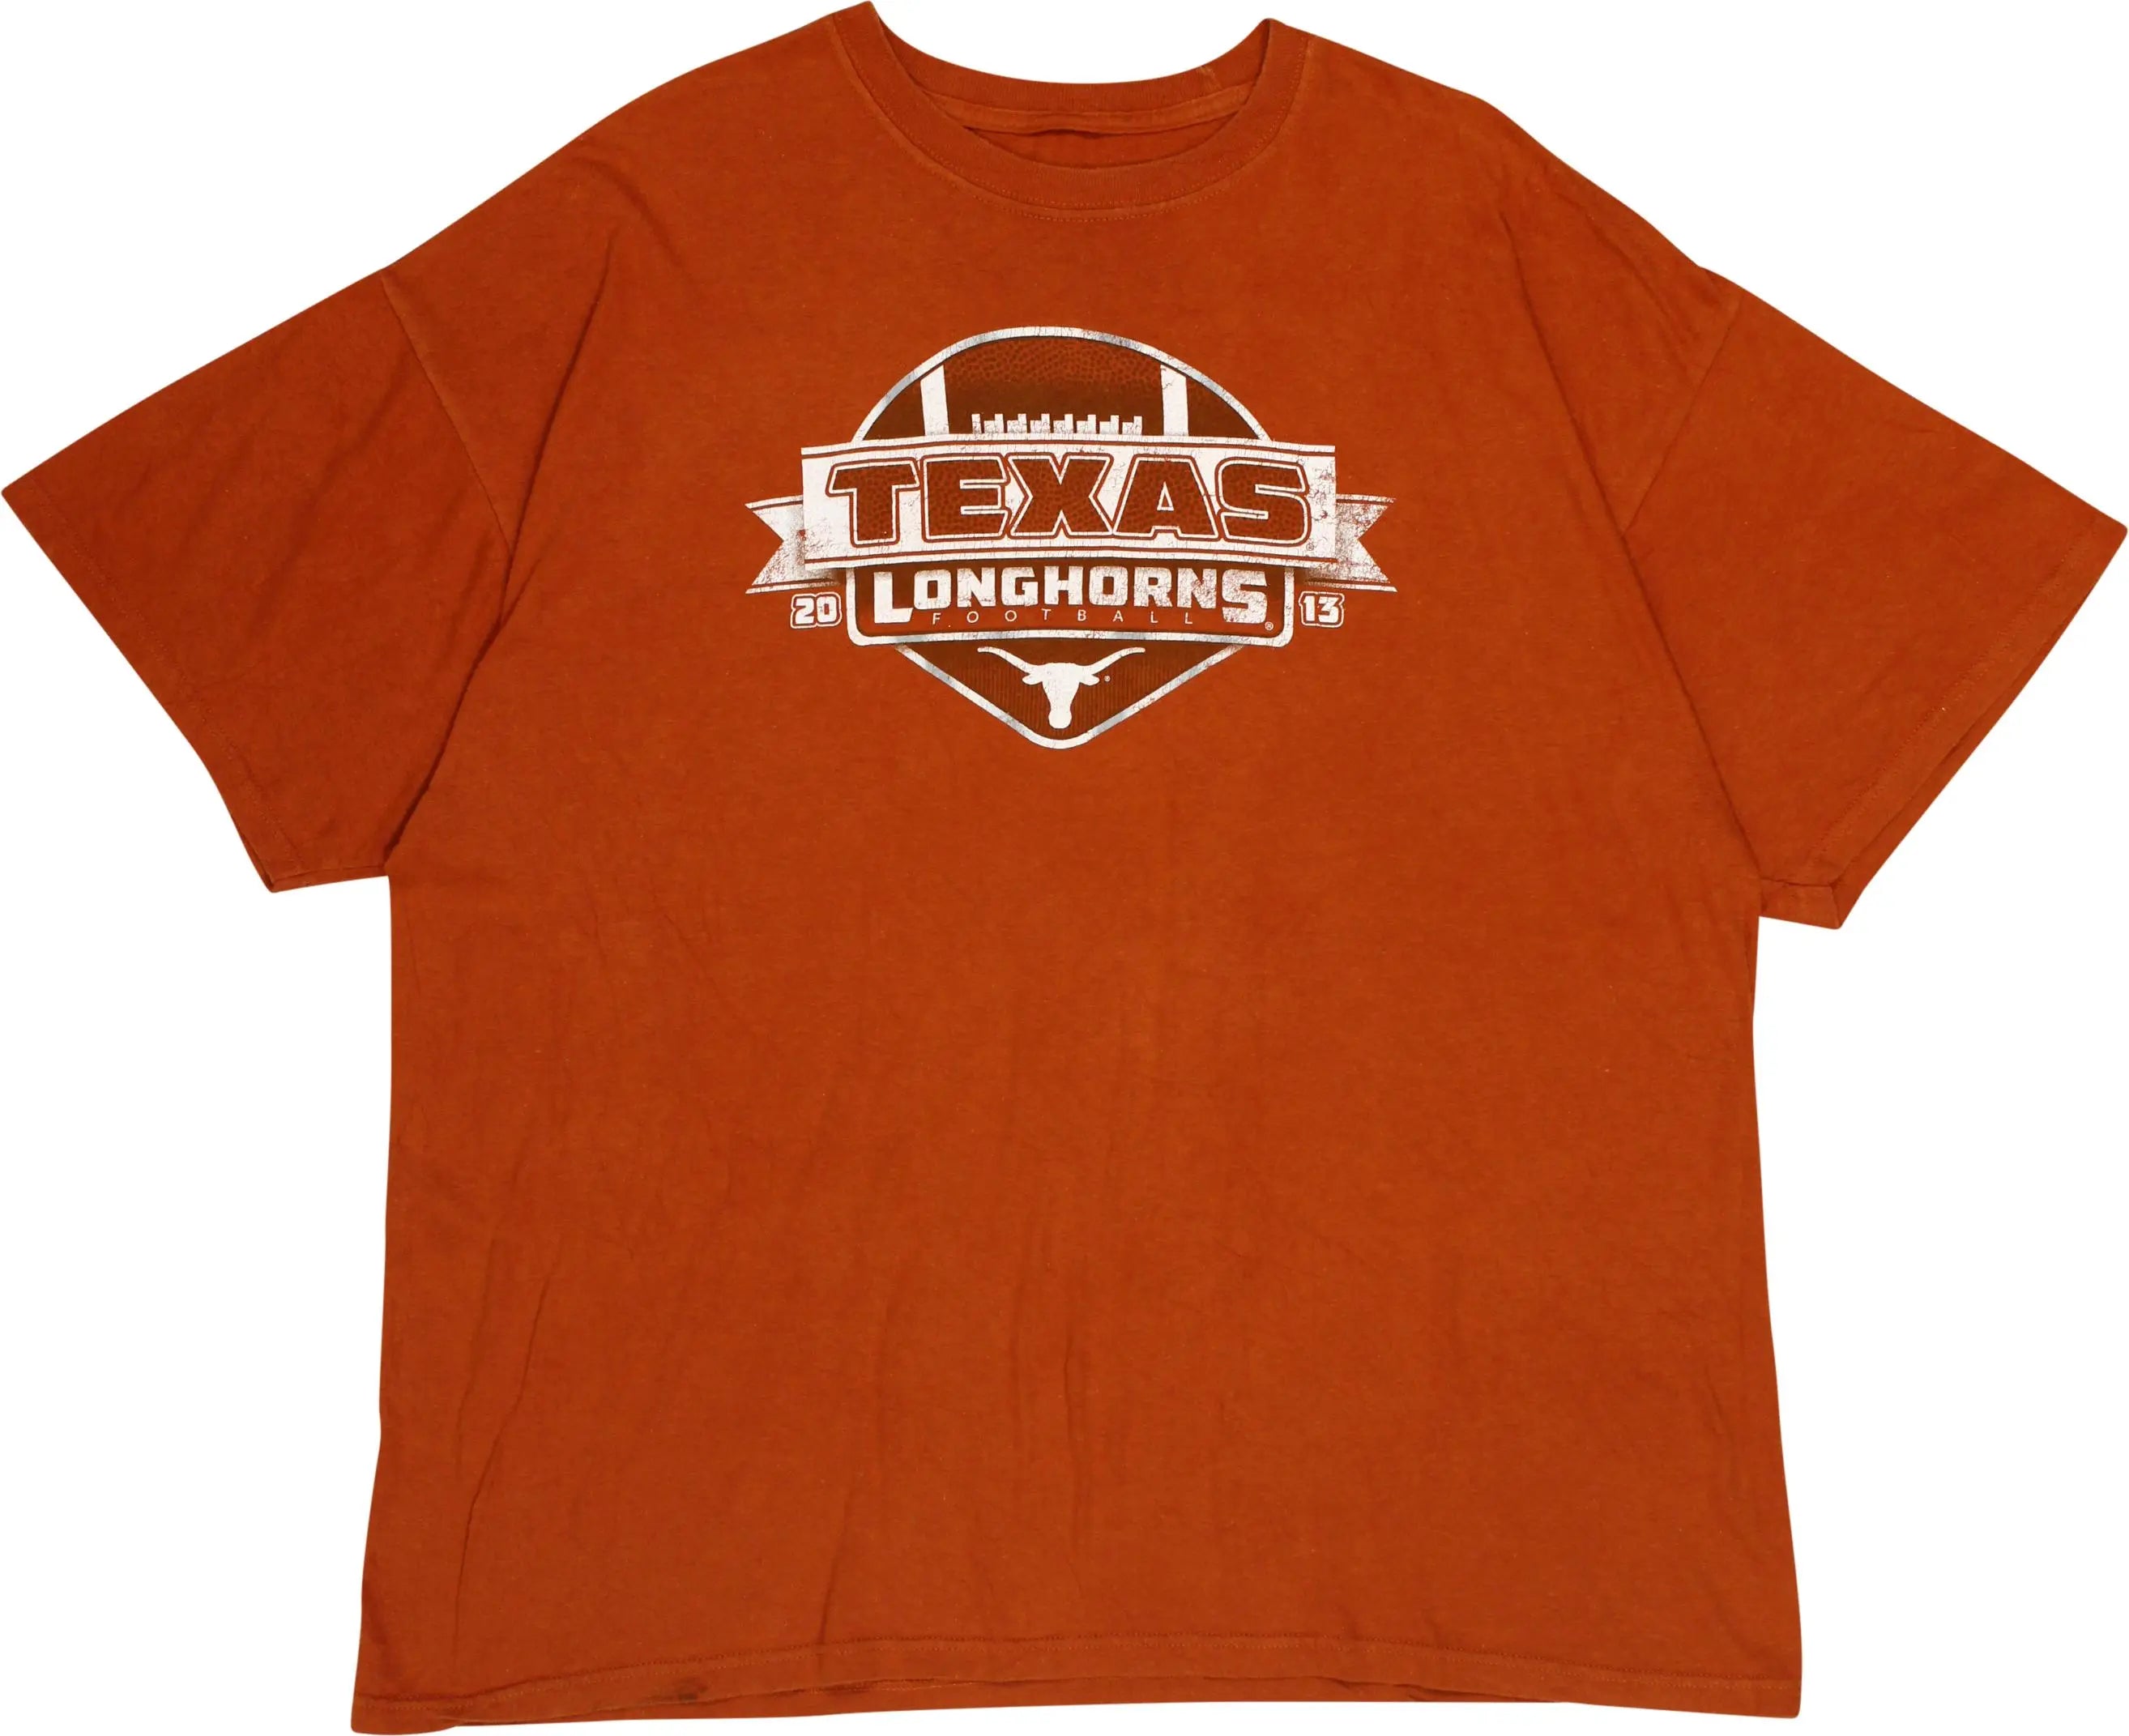 Viatran - Texas Longhorns T-Shirt- ThriftTale.com - Vintage and second handclothing